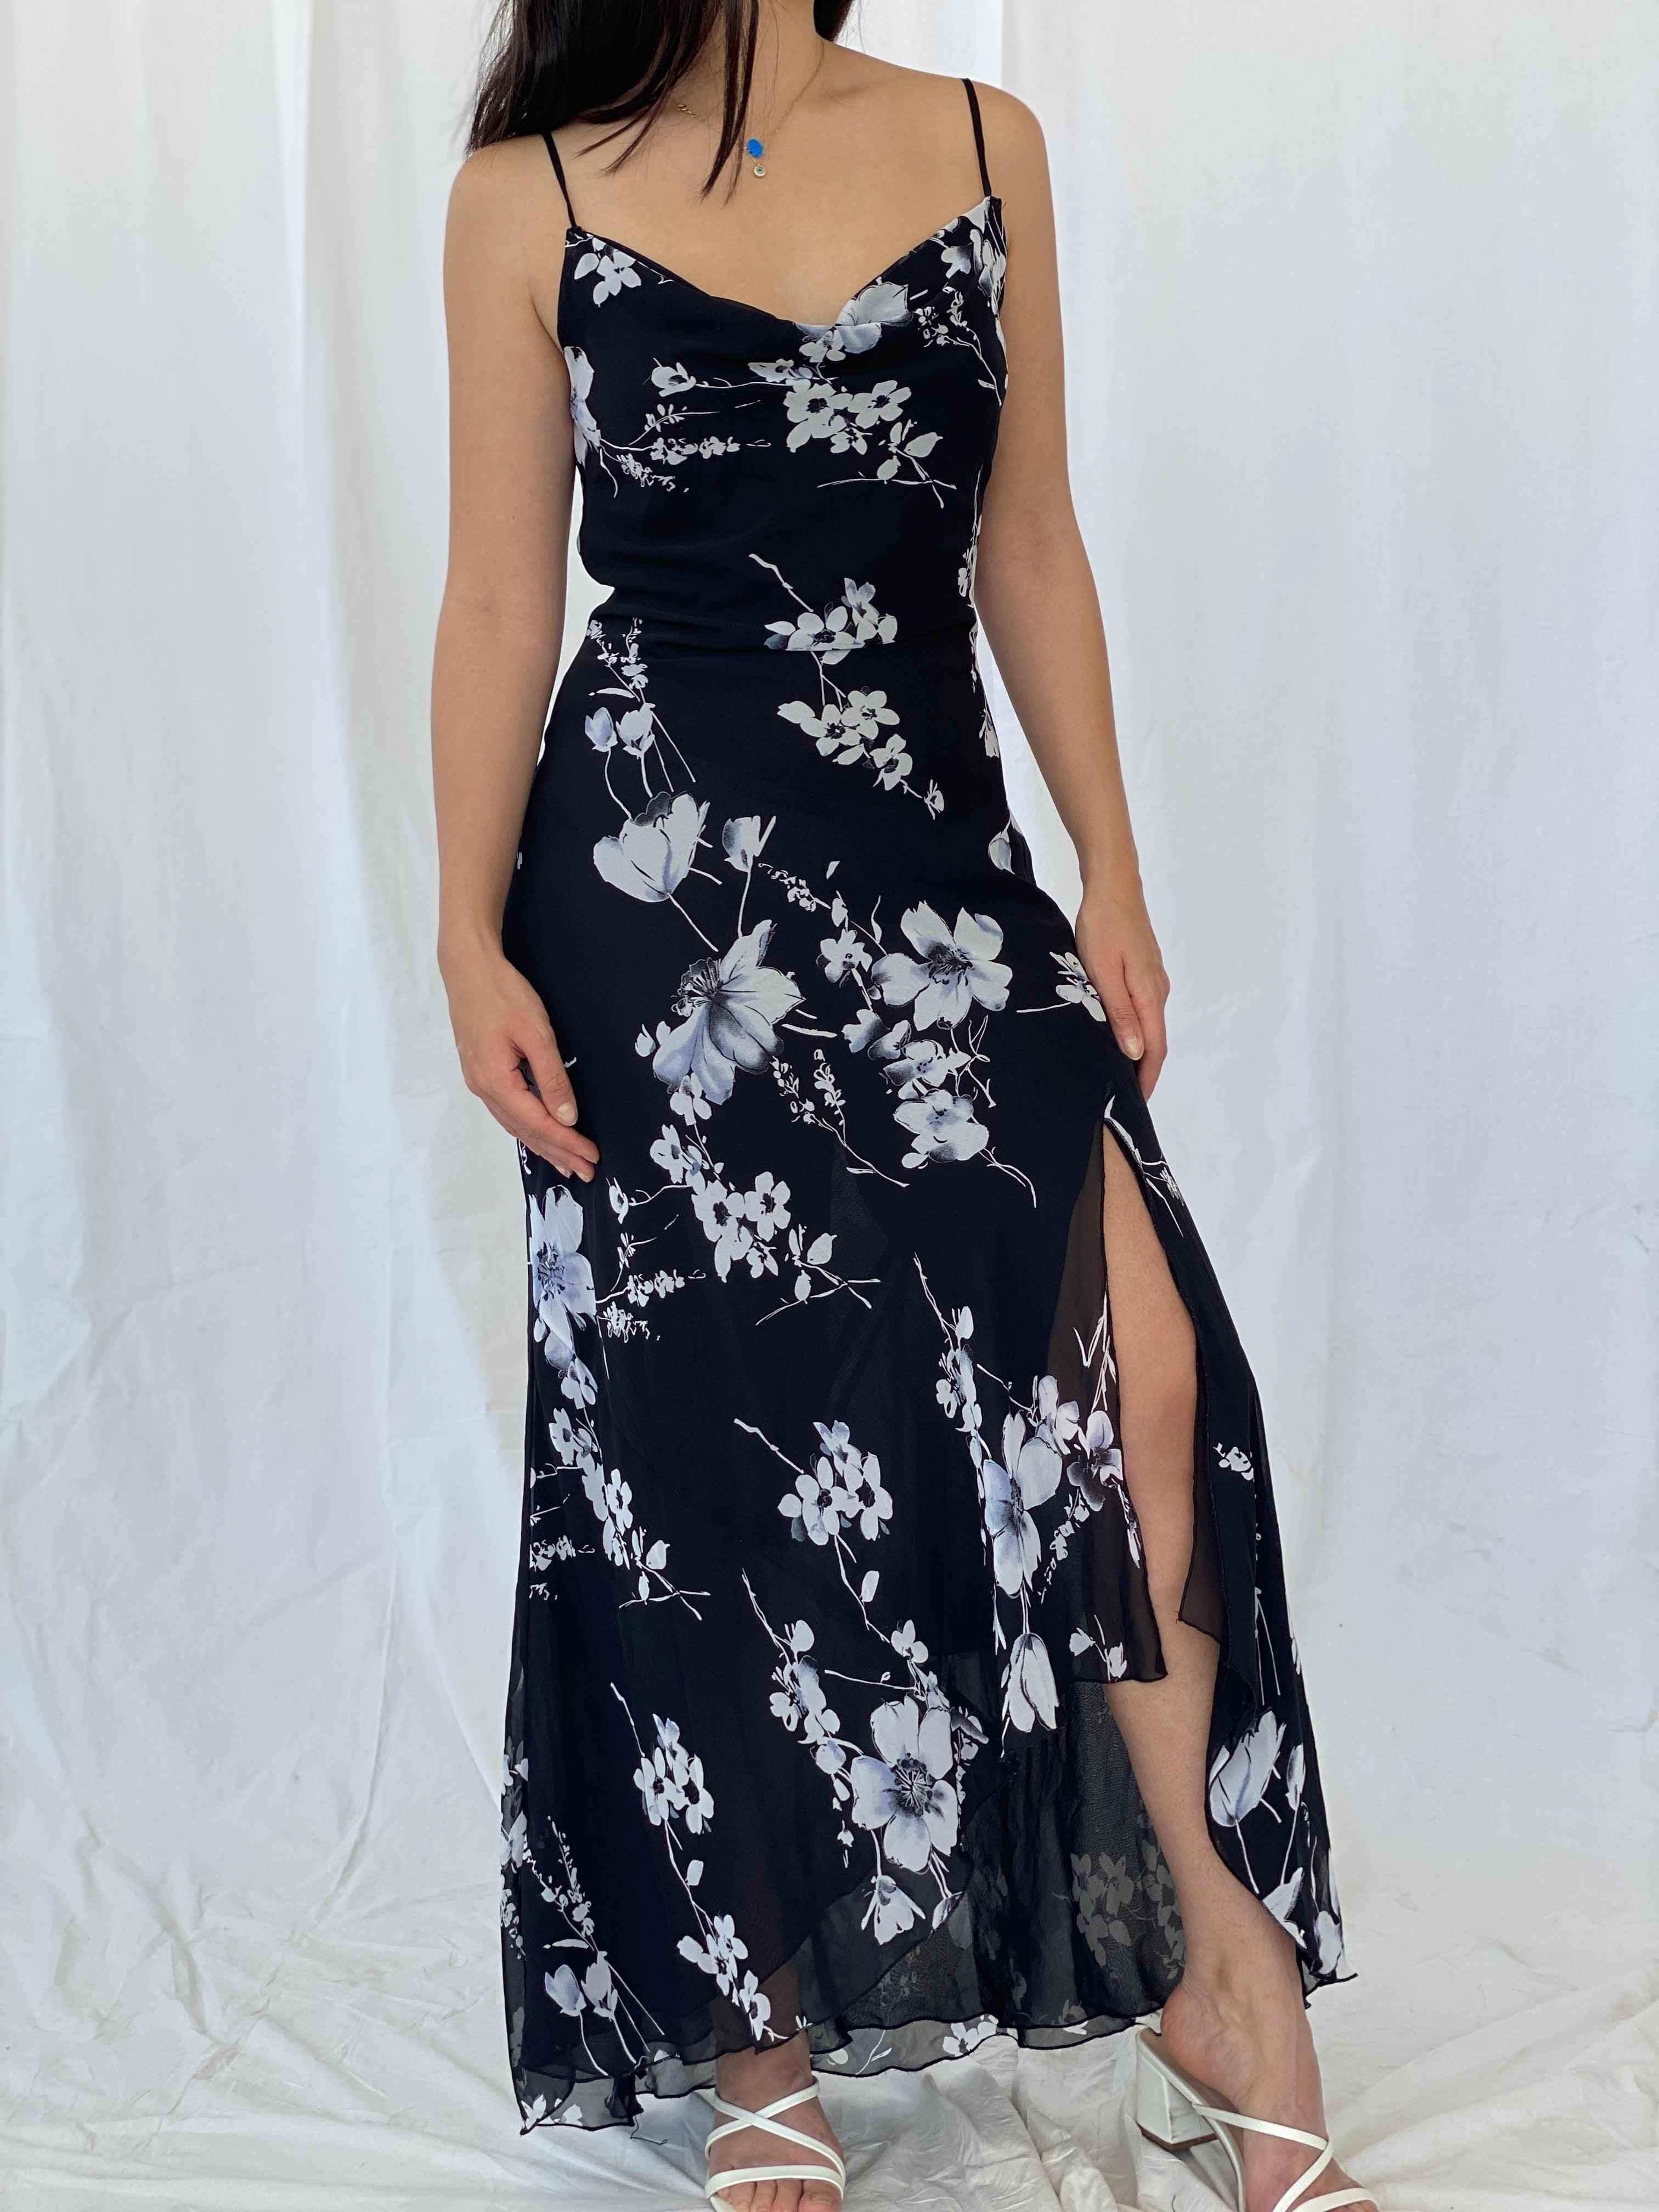 Vintage SYNDICATE Floral Gown - Balagan Vintage Evening Dress 90s dress, Batoul, black dress, floral, floral dress, formal, formal dress